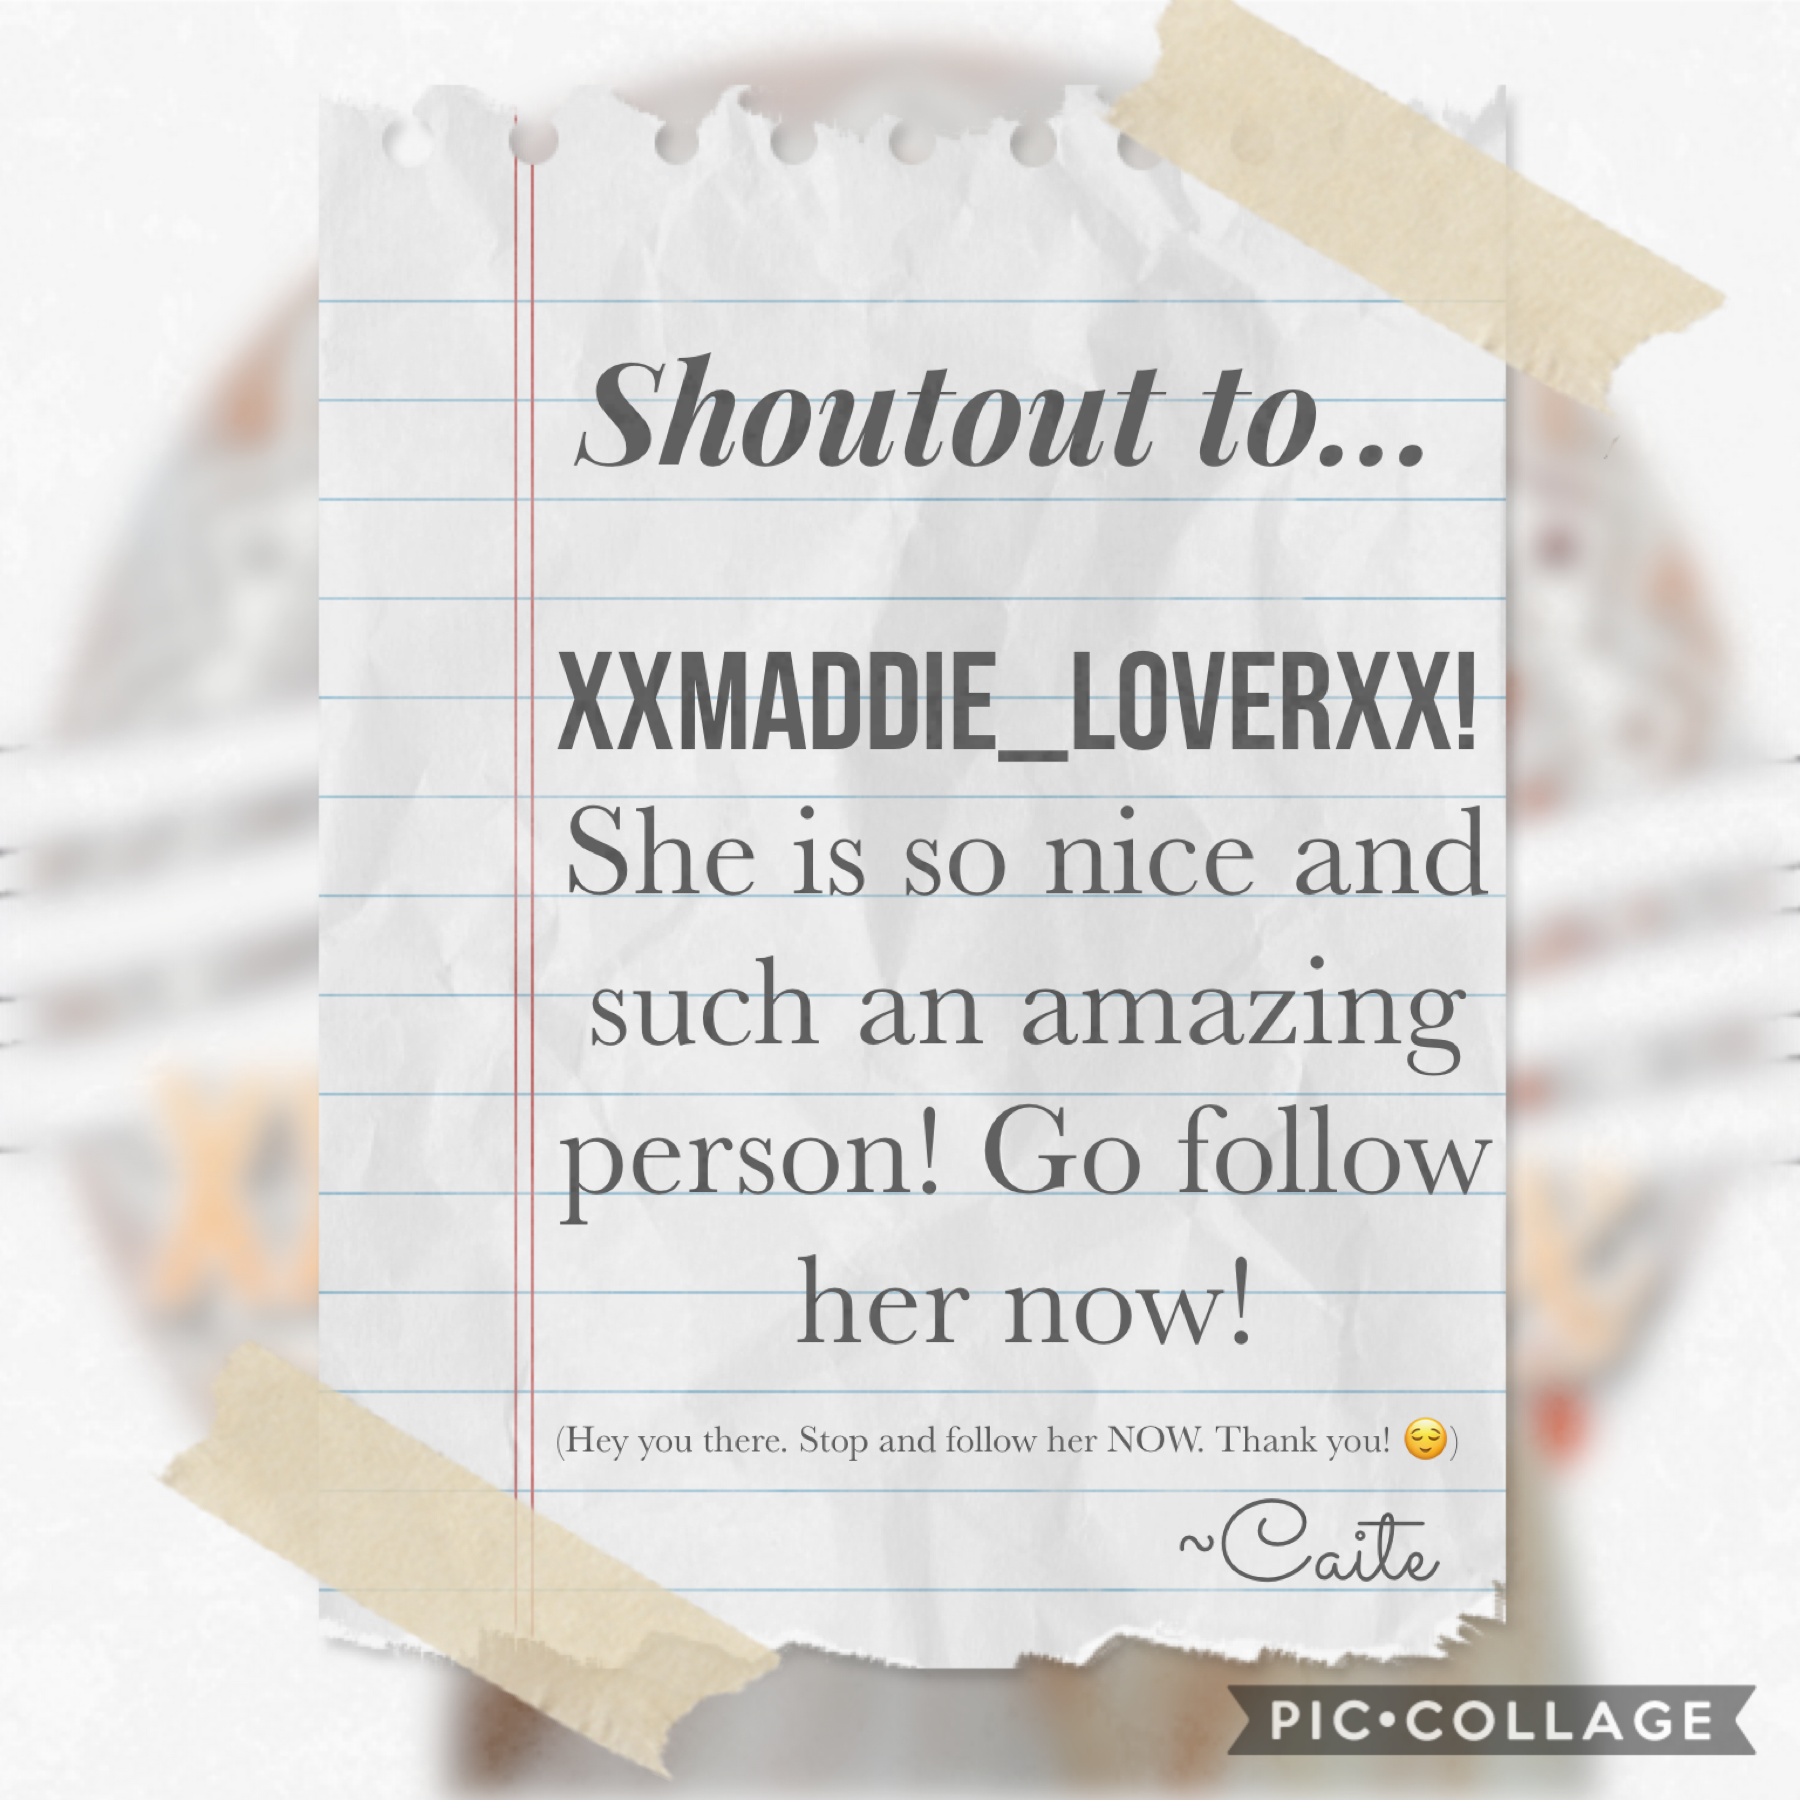 Go follow her now!